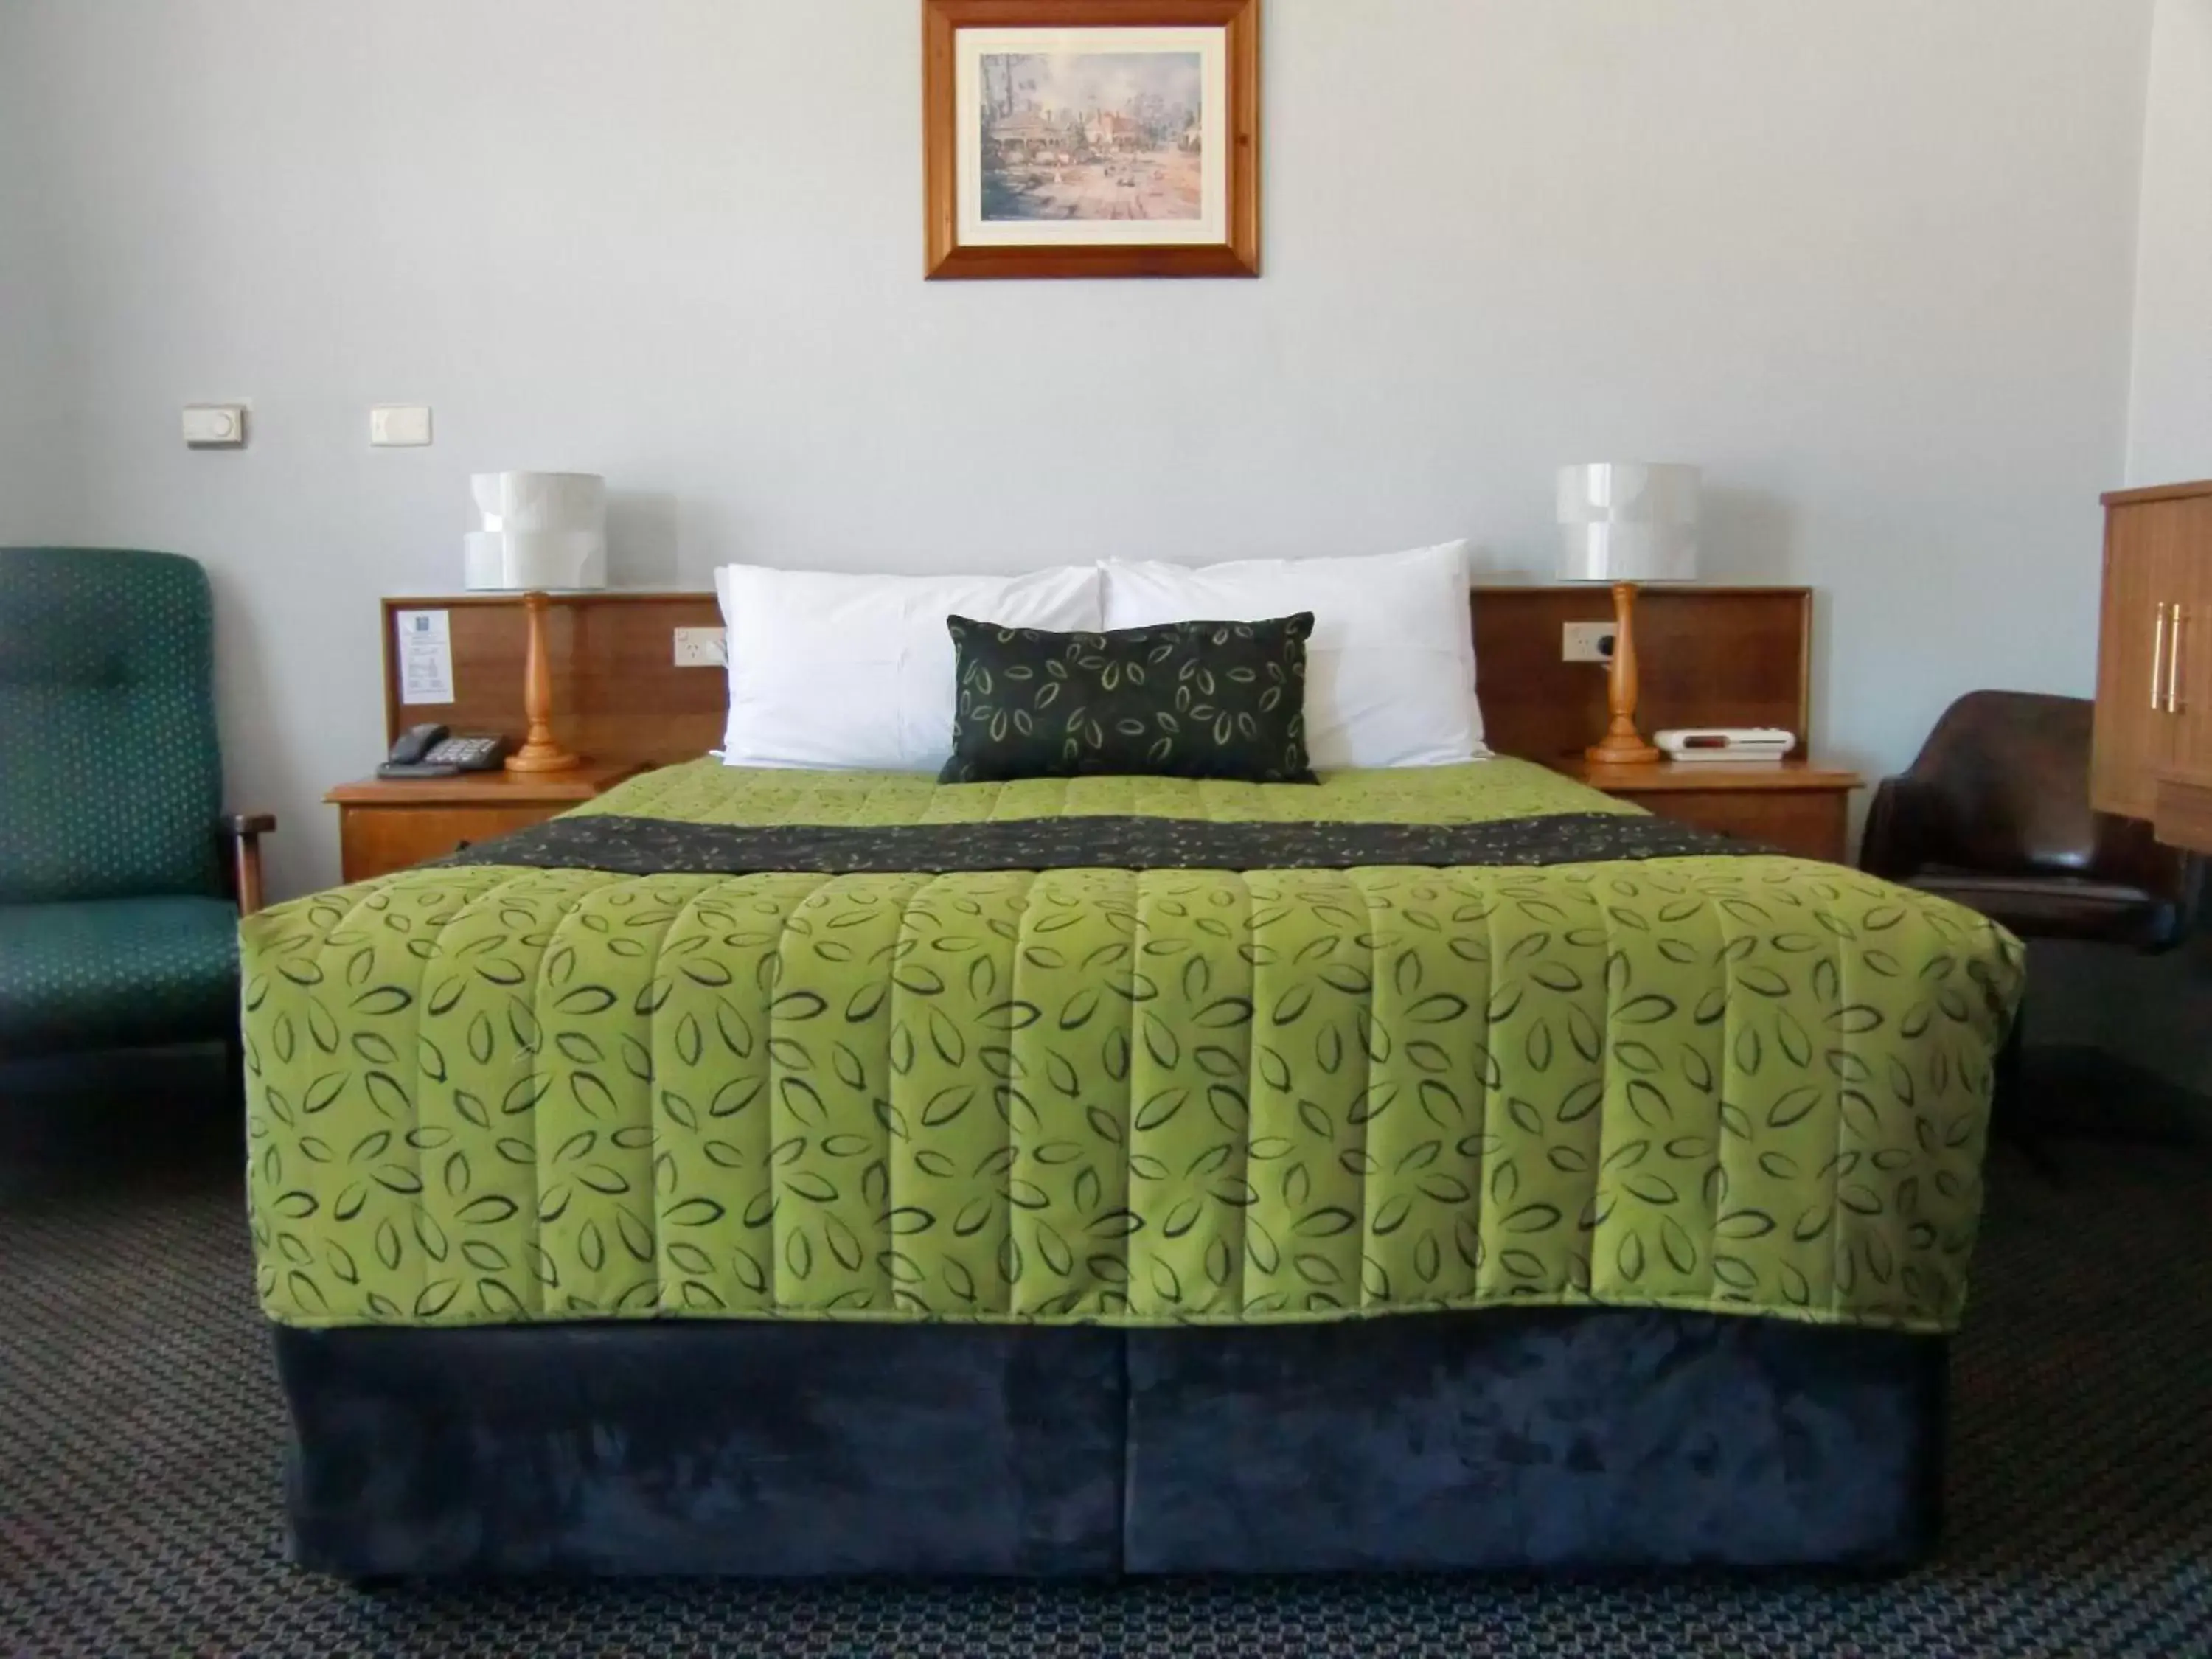 Bed, Room Photo in Castle Motel Bairnsdale